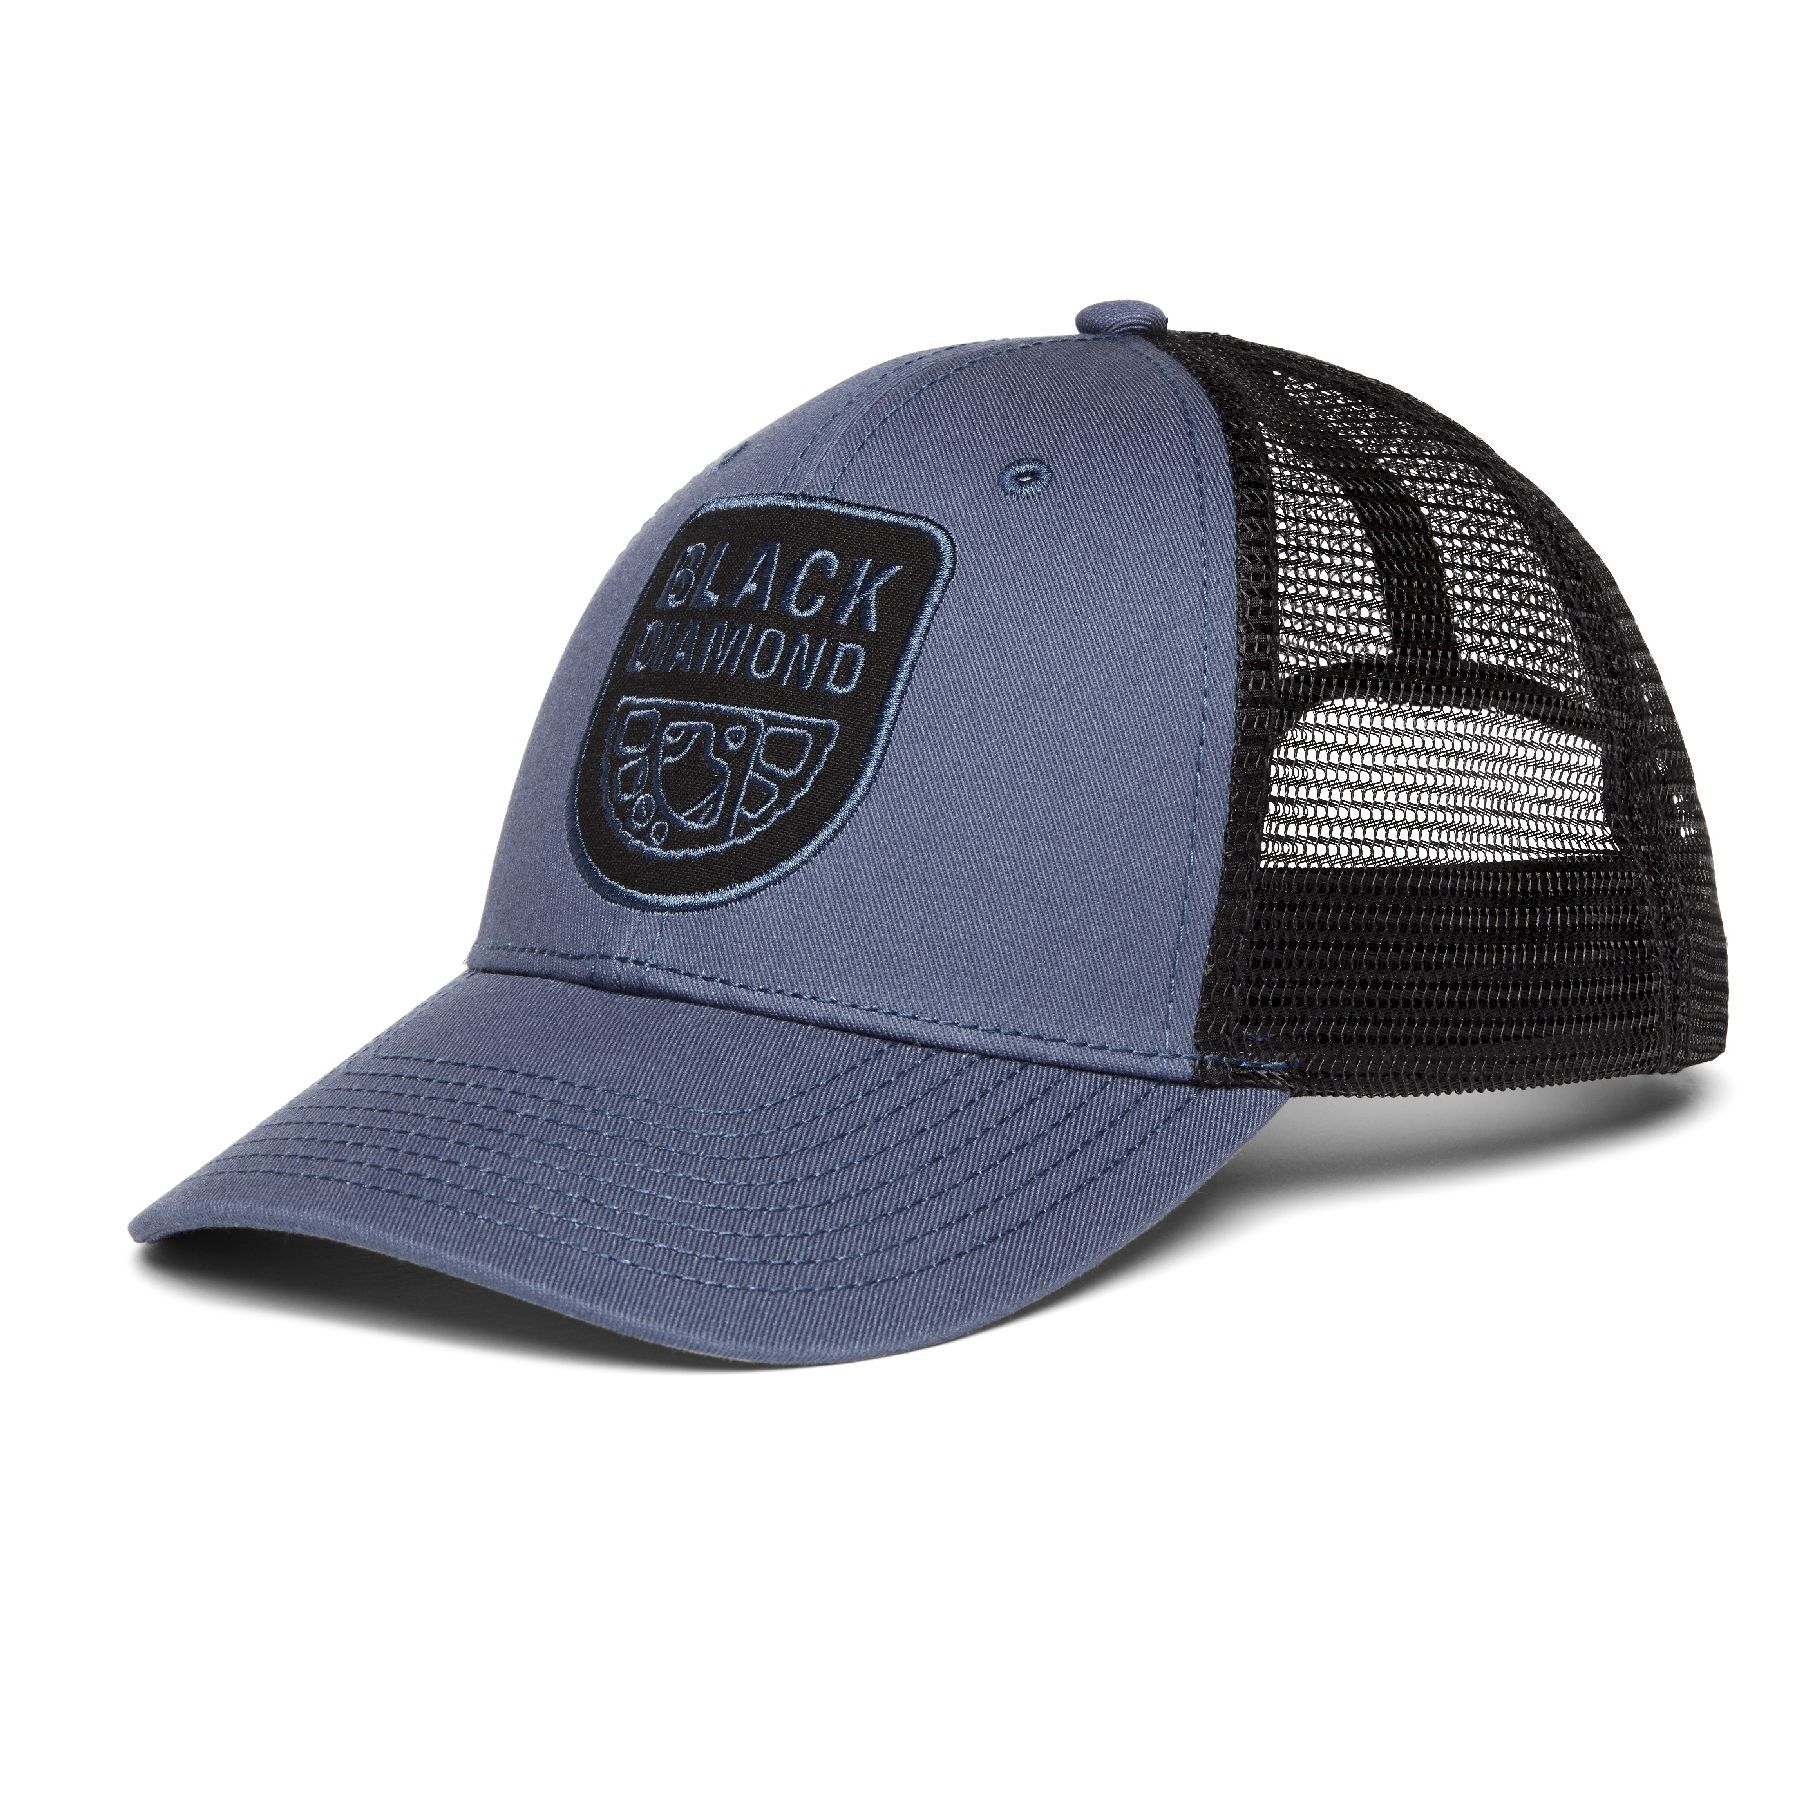 Black Diamond BD Low Profile Trucker Hat - Cap